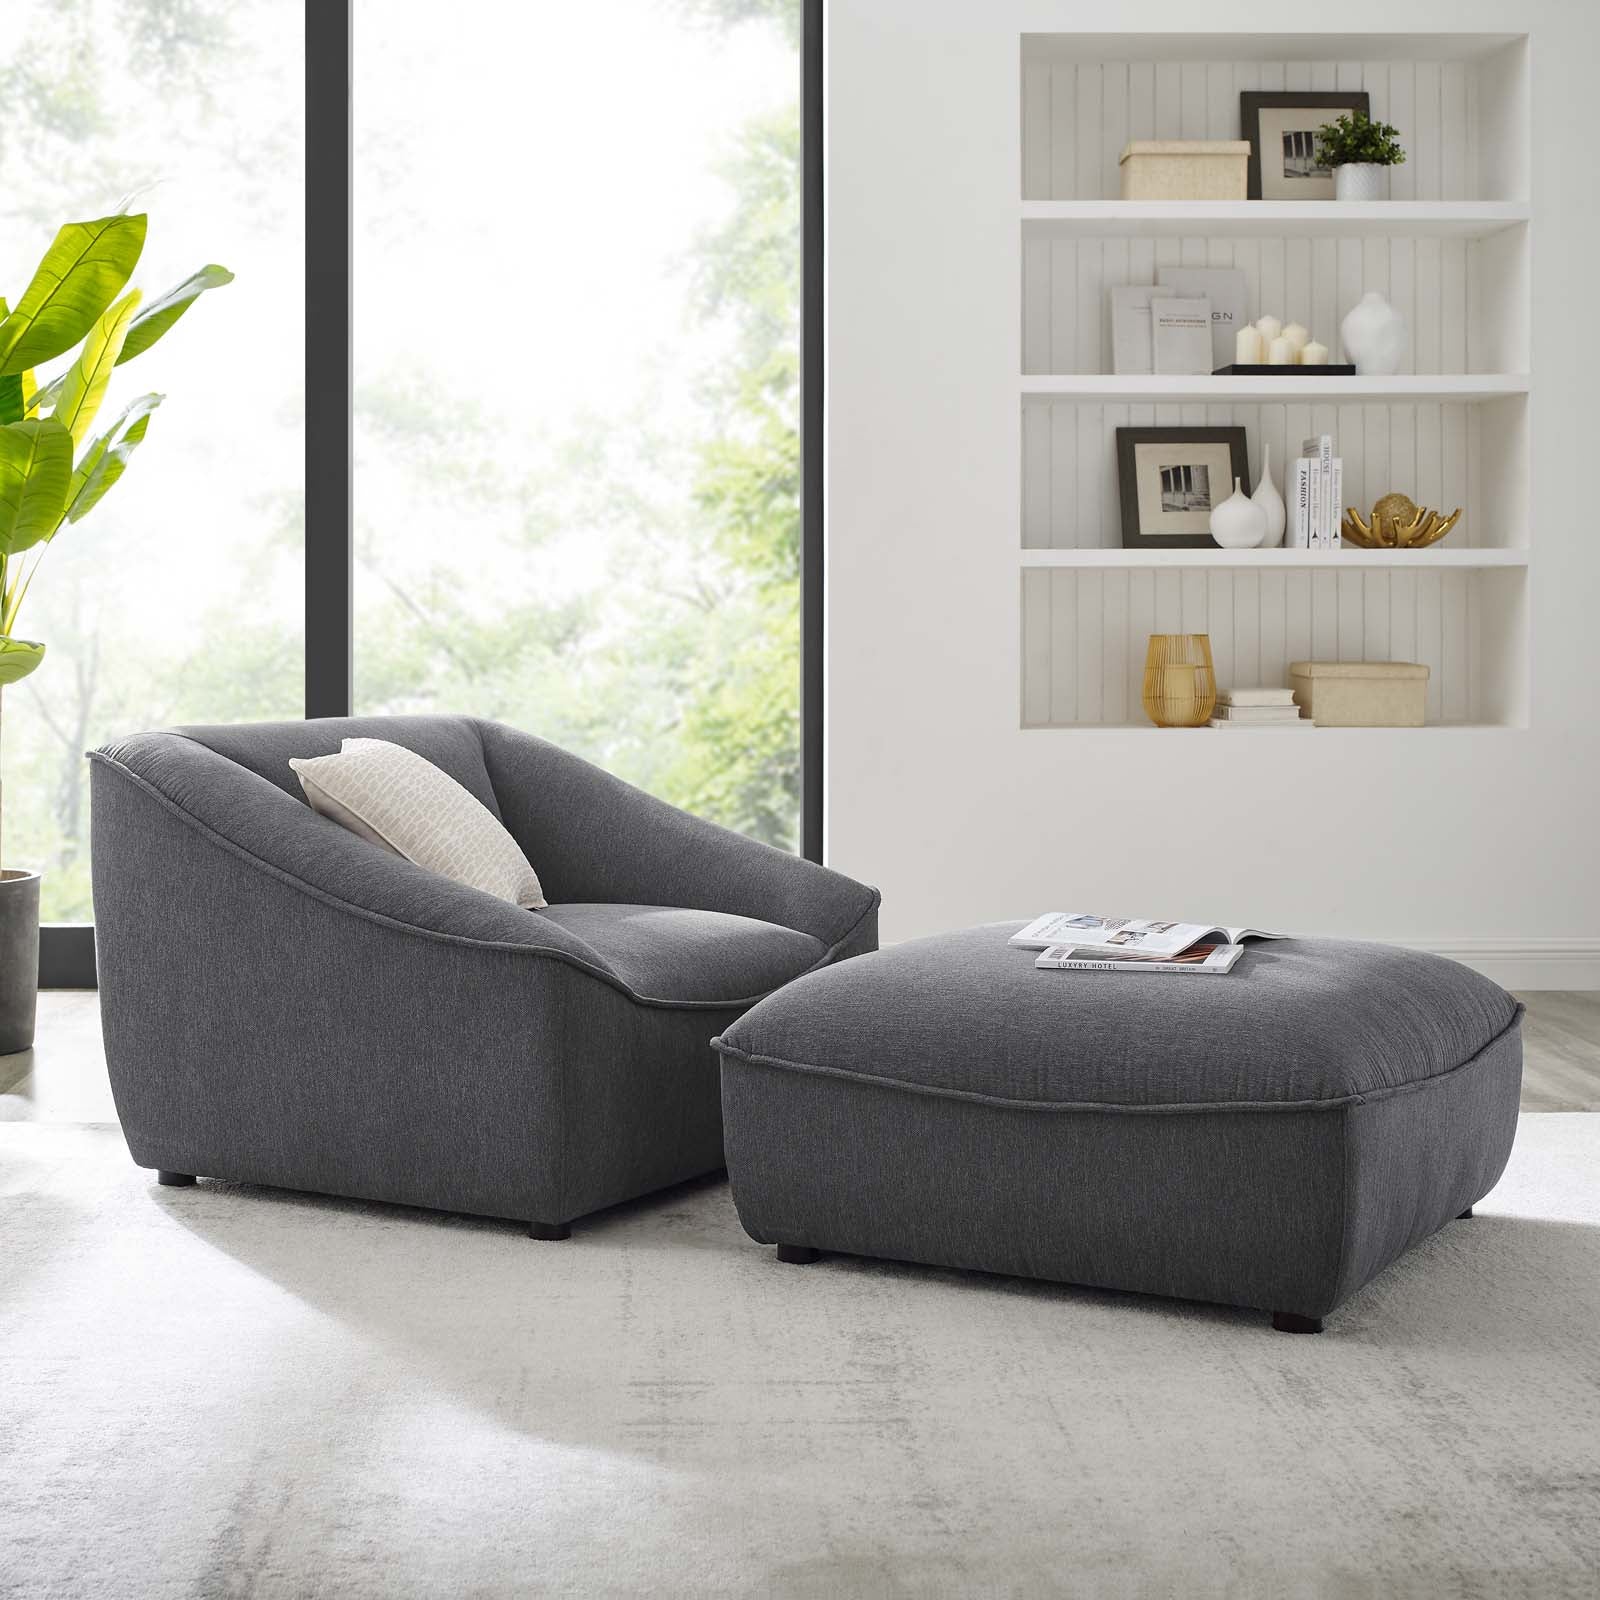 Modway Living Room Sets - Comprise 2-Piece Living Room Set Charcoal